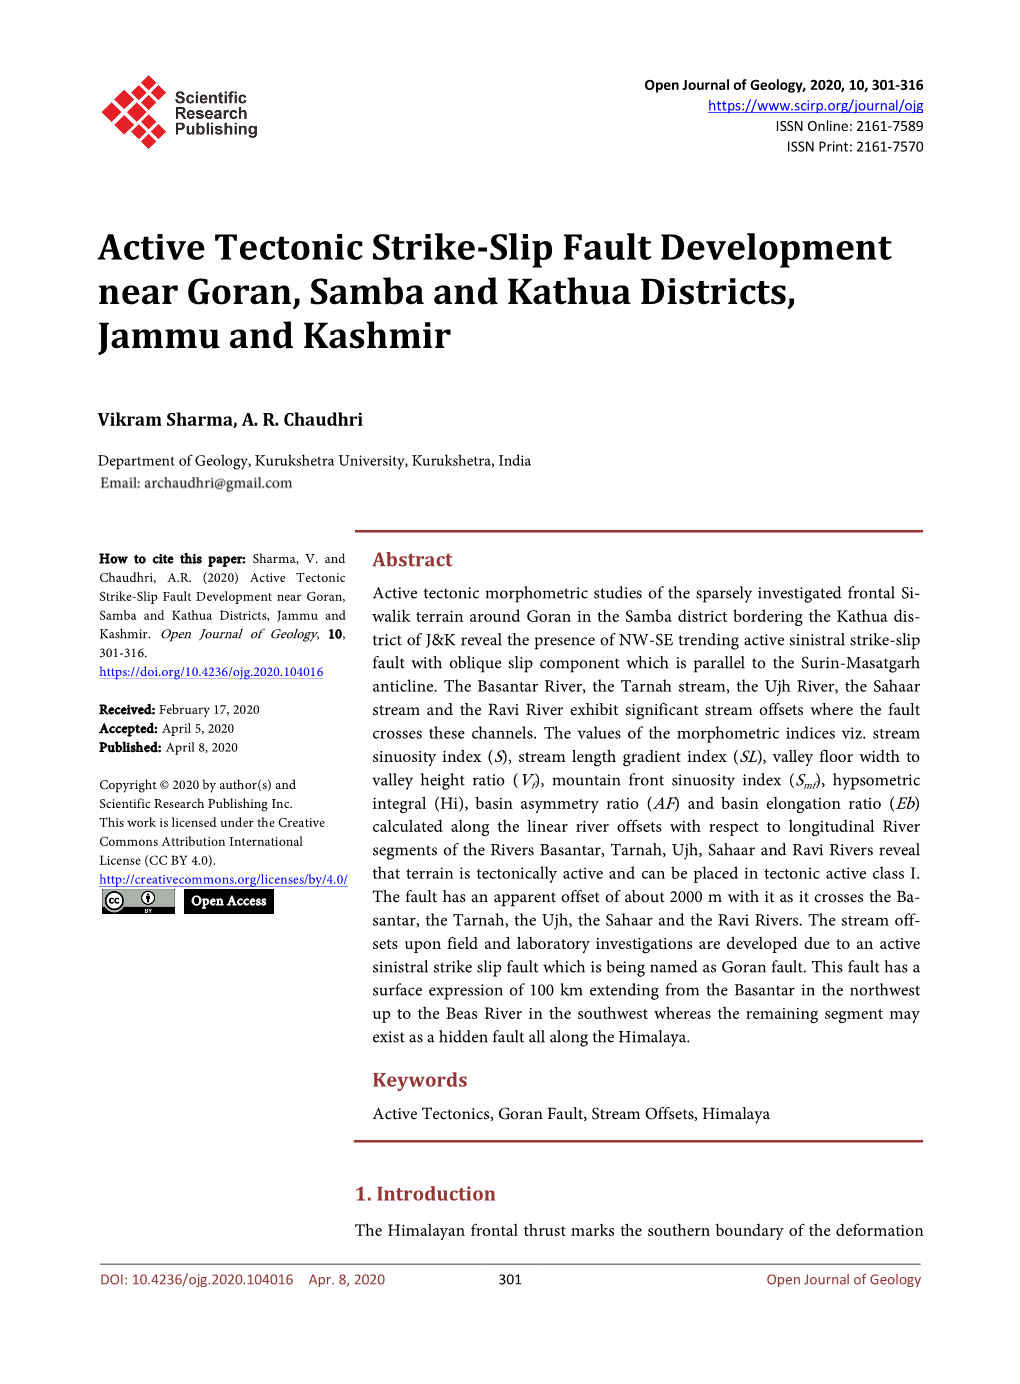 Active Tectonic Strike-Slip Fault Development Near Goran, Samba and Kathua Districts, Jammu and Kashmir